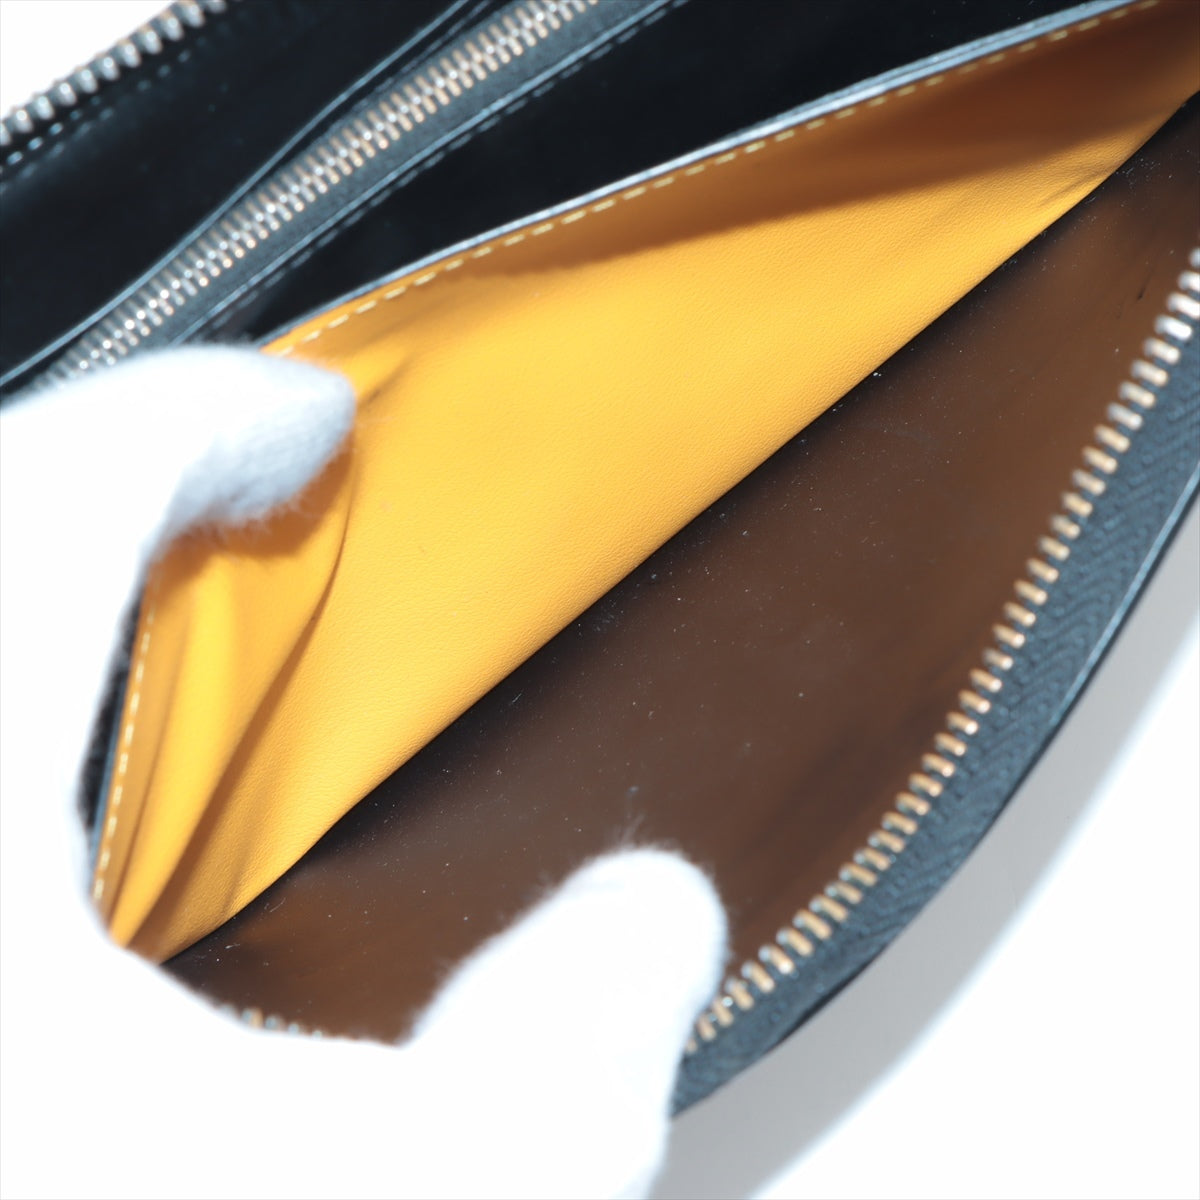 Goyard Herringbone Matignon PVC & leather Round-Zip-Wallet Black